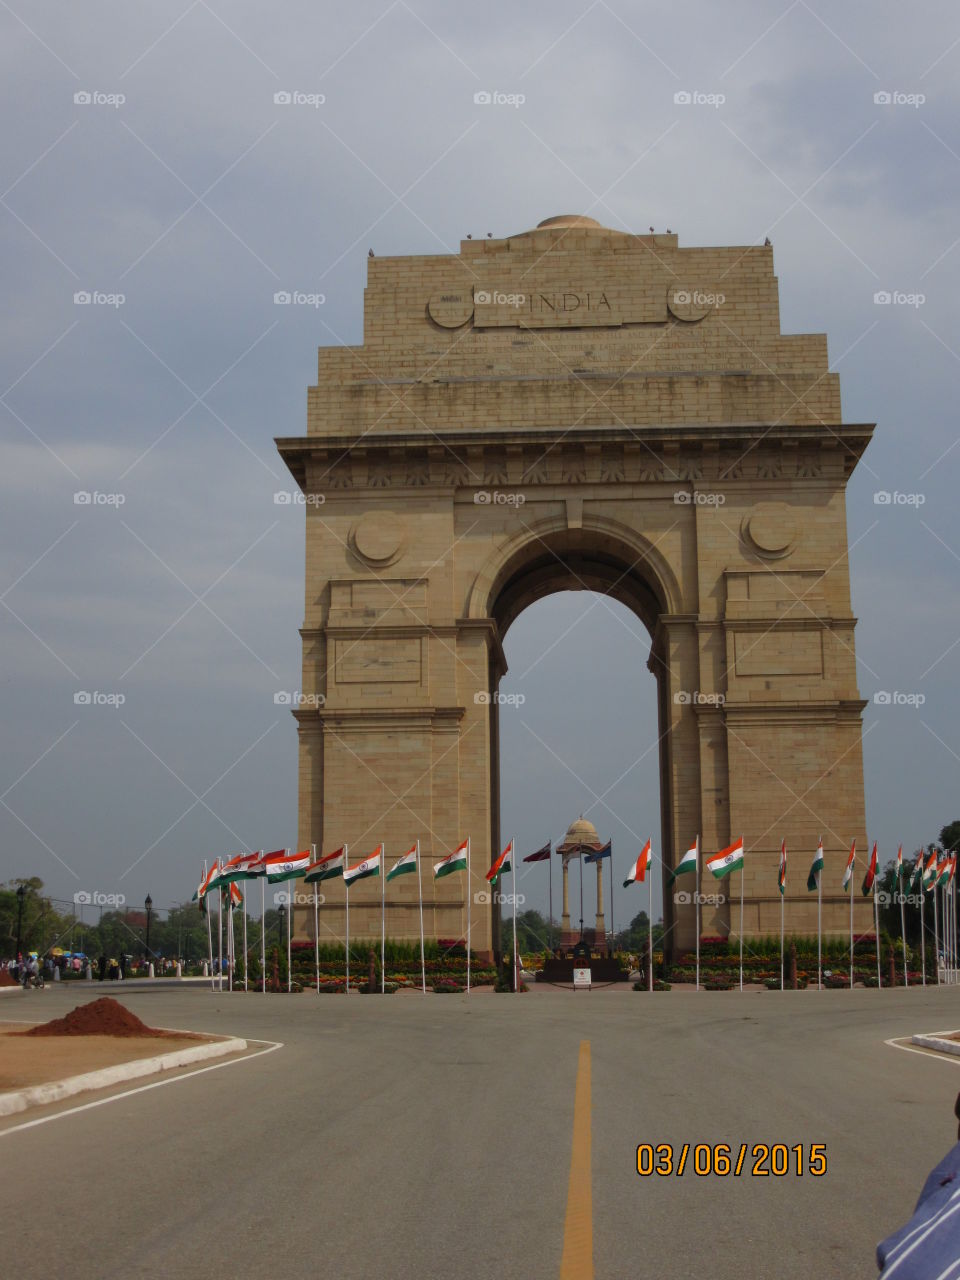 India Gate 
Delhi, India